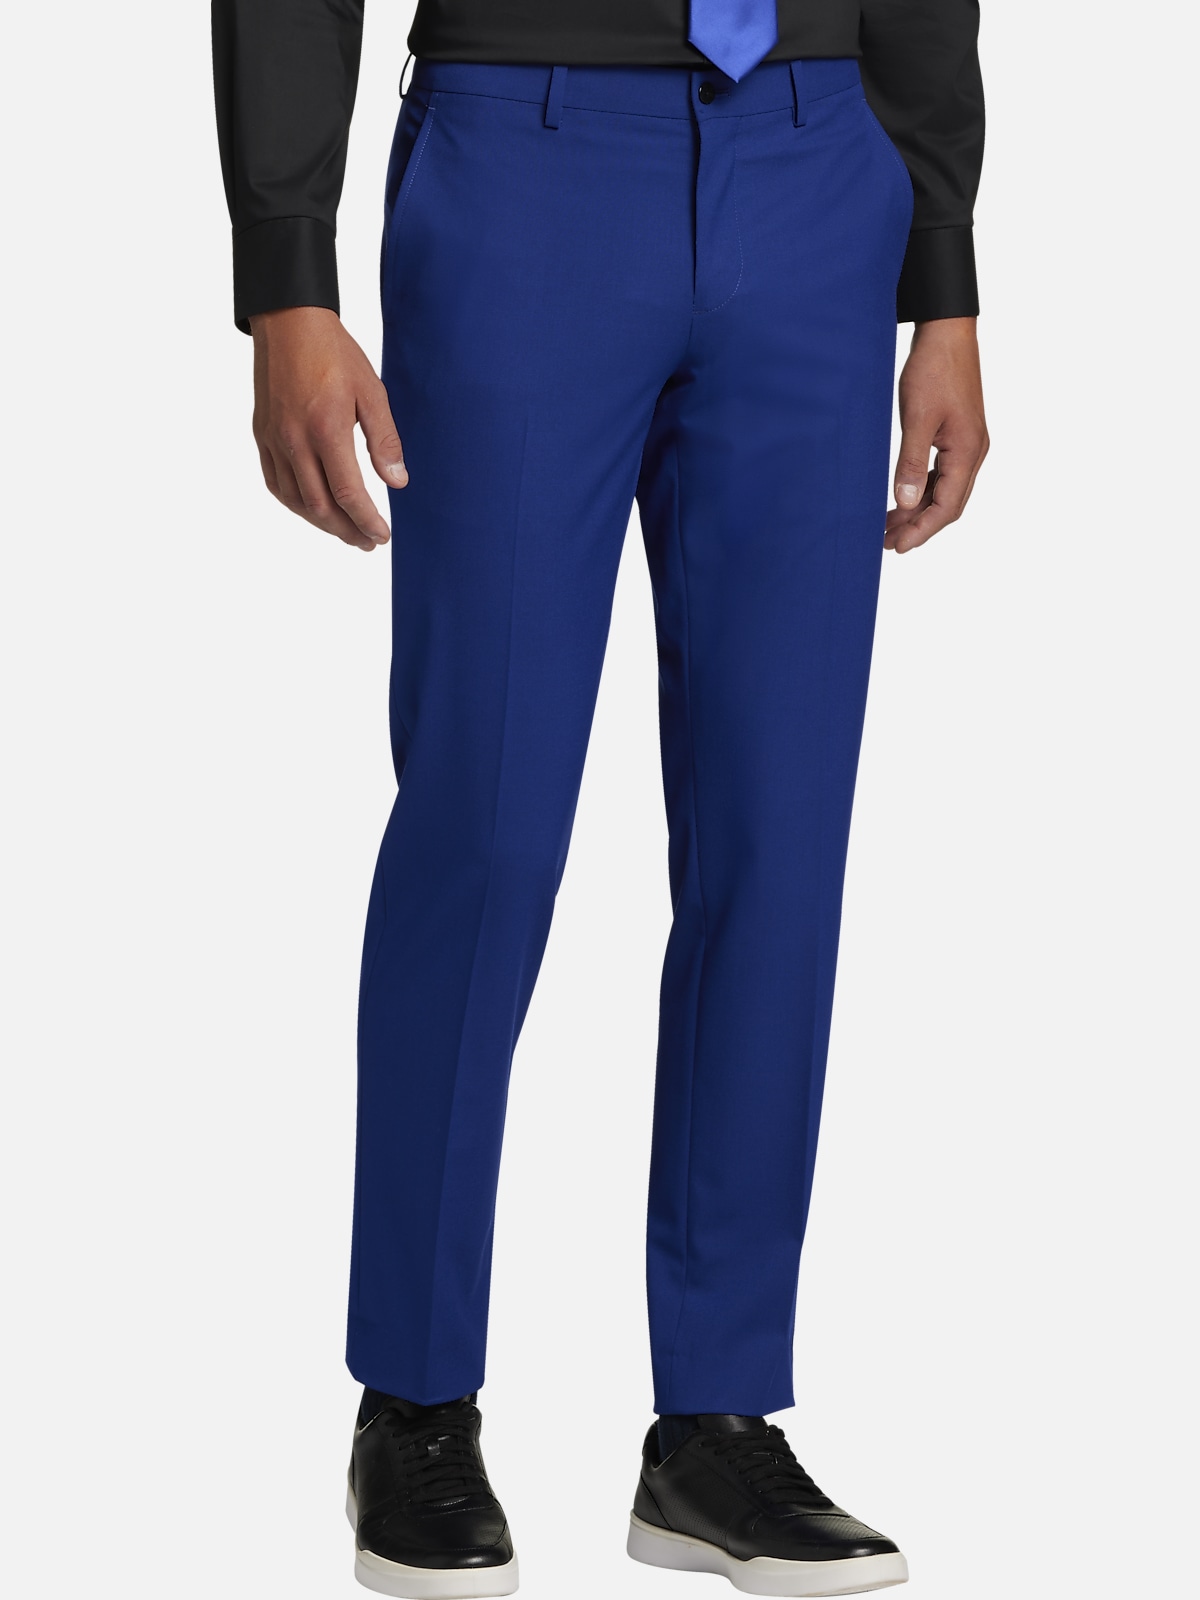 Egara Skinny Fit Suit Separates Pants | All Sale| Men's Wearhouse